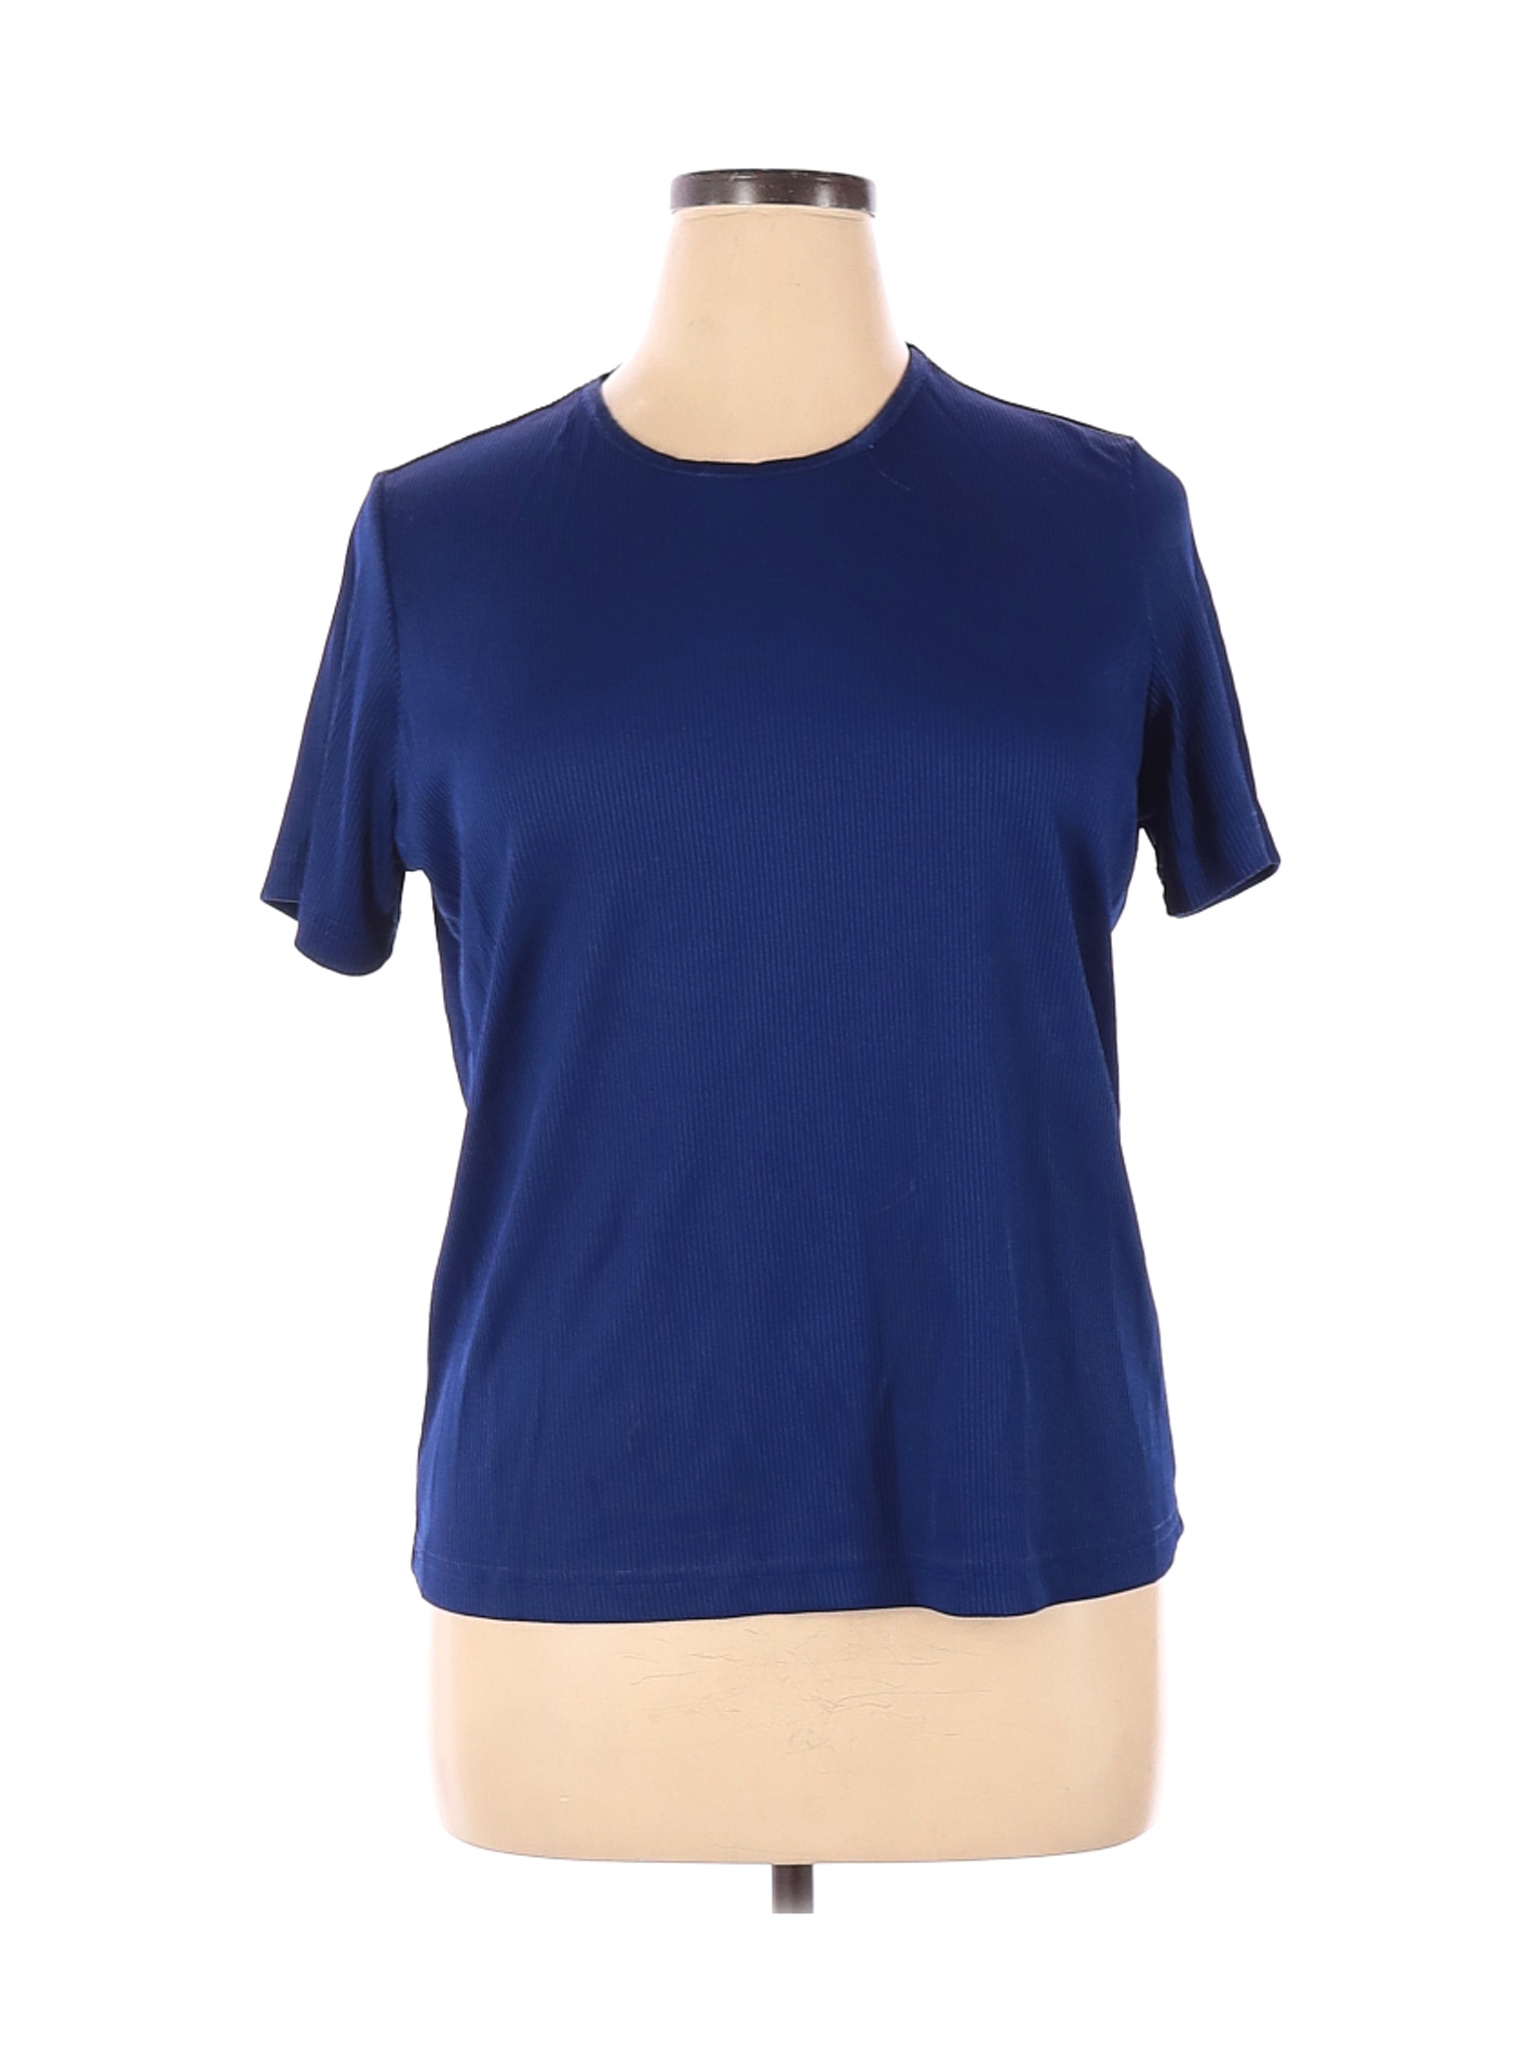 Allison Daley Women Blue Short Sleeve Top XL | eBay